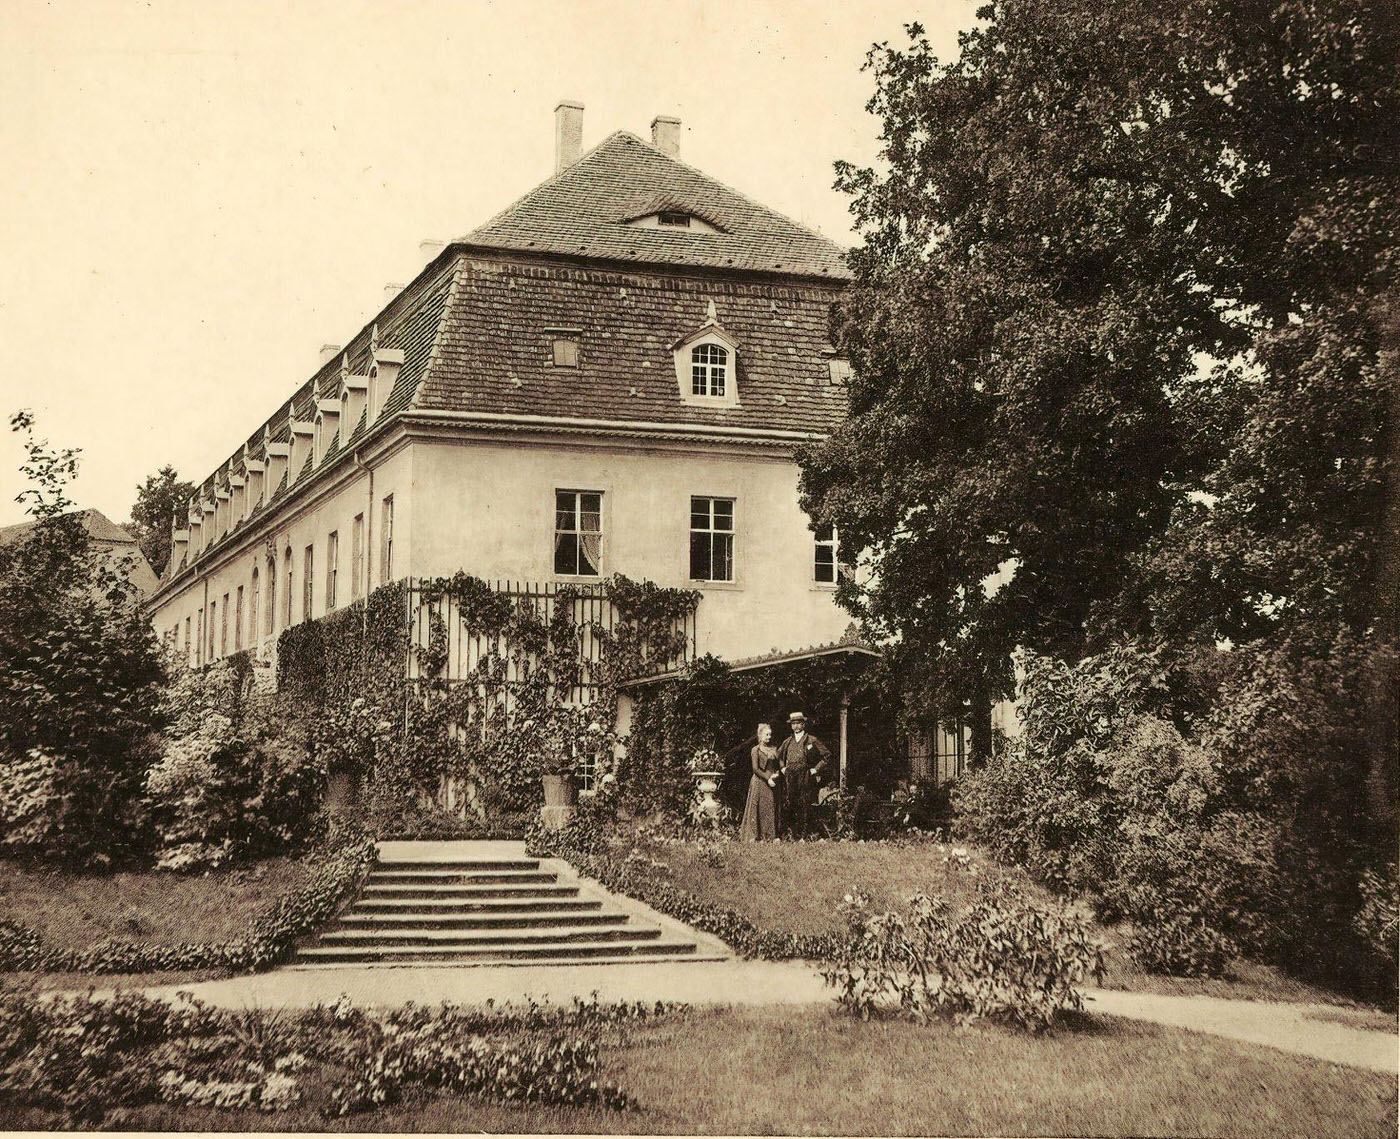 Houses in Landkreis Leipzig, Lossatal, Landkreis Leipzig, Heyda bei Falkenhain, Germany, 1901.